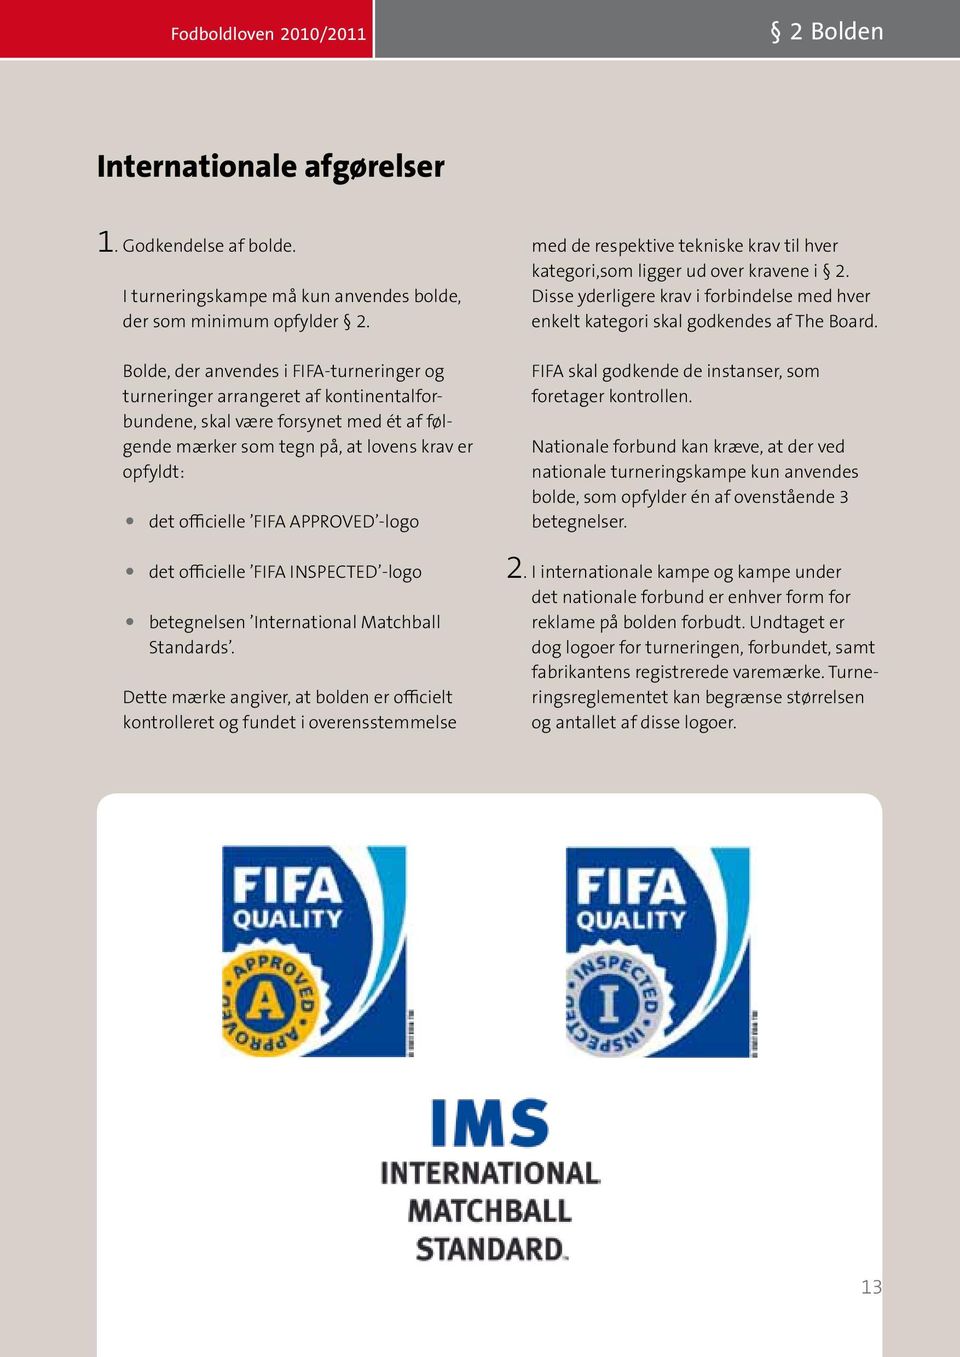 APPROVED -logo det officielle FIFA INSPECTED -logo betegnelsen International Matchball Standards.